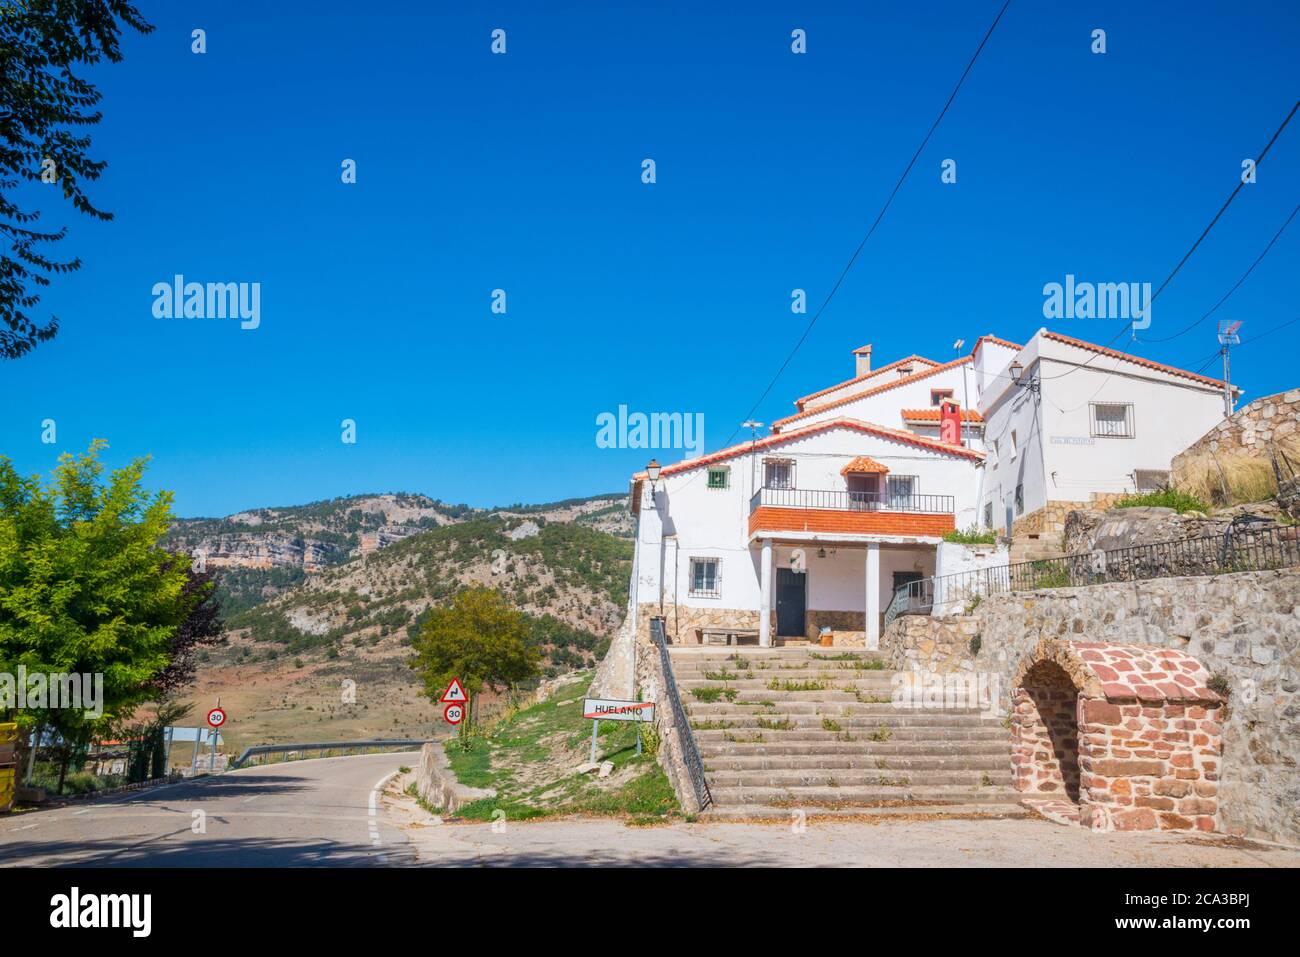 House and landscape. Huelamo, Cuenca province, Castilla La Mancha, Spain. Stock Photo